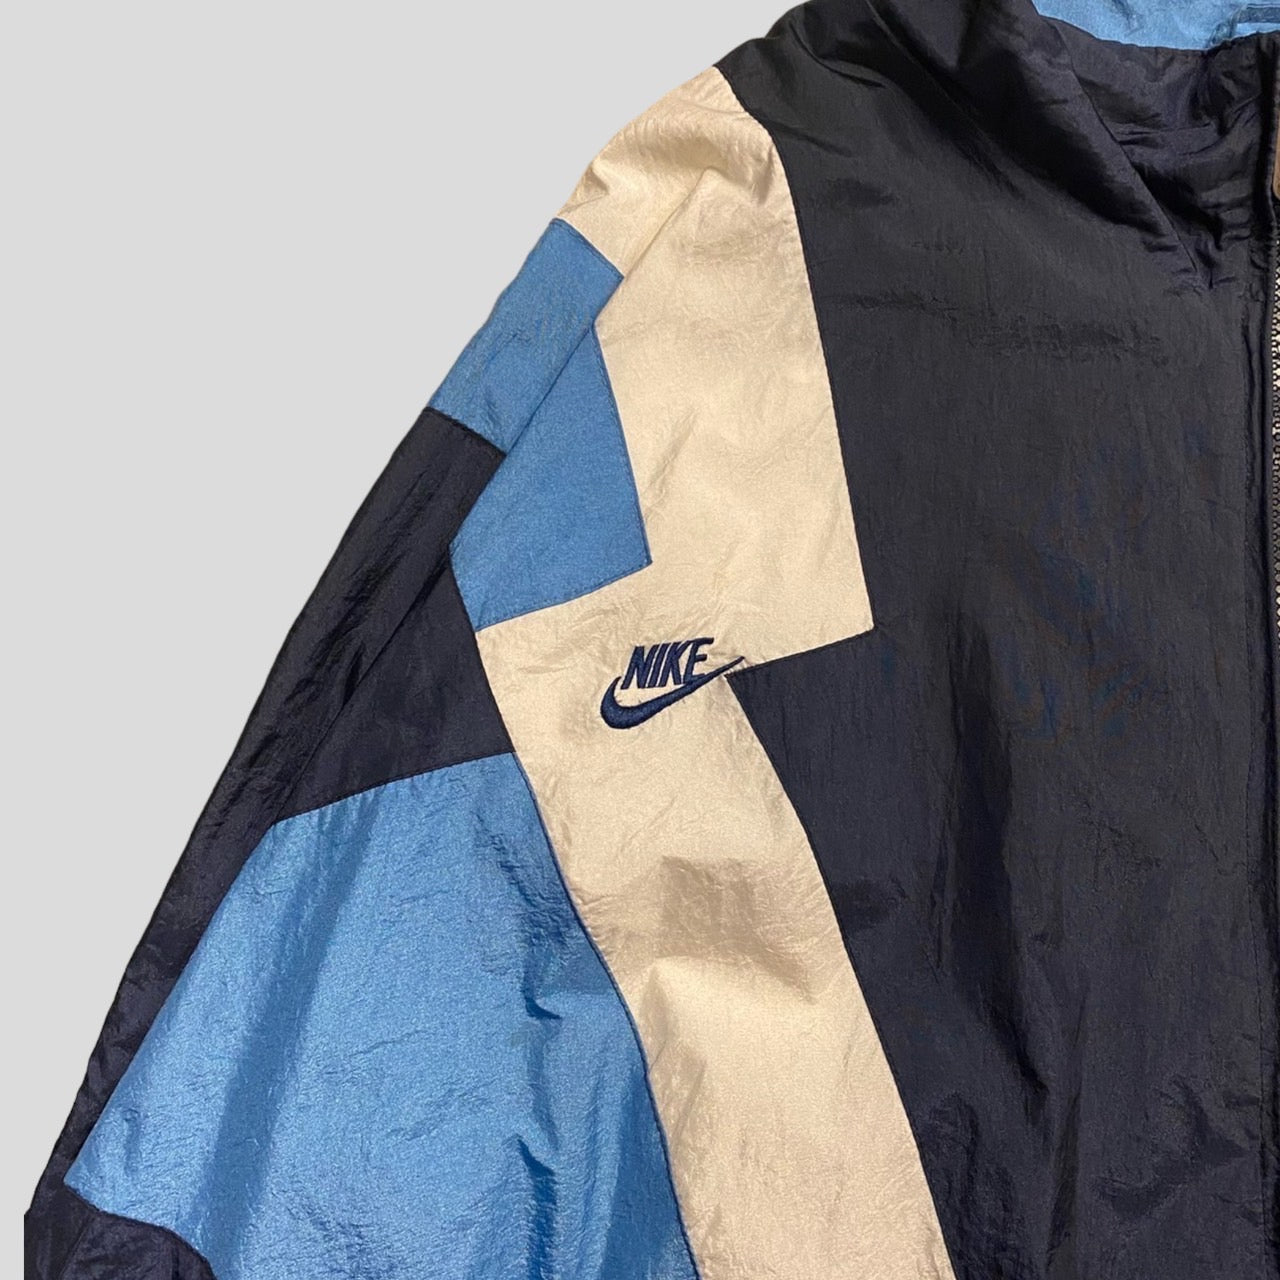 90's NIKE nylon jacket　Navy/Blue/White